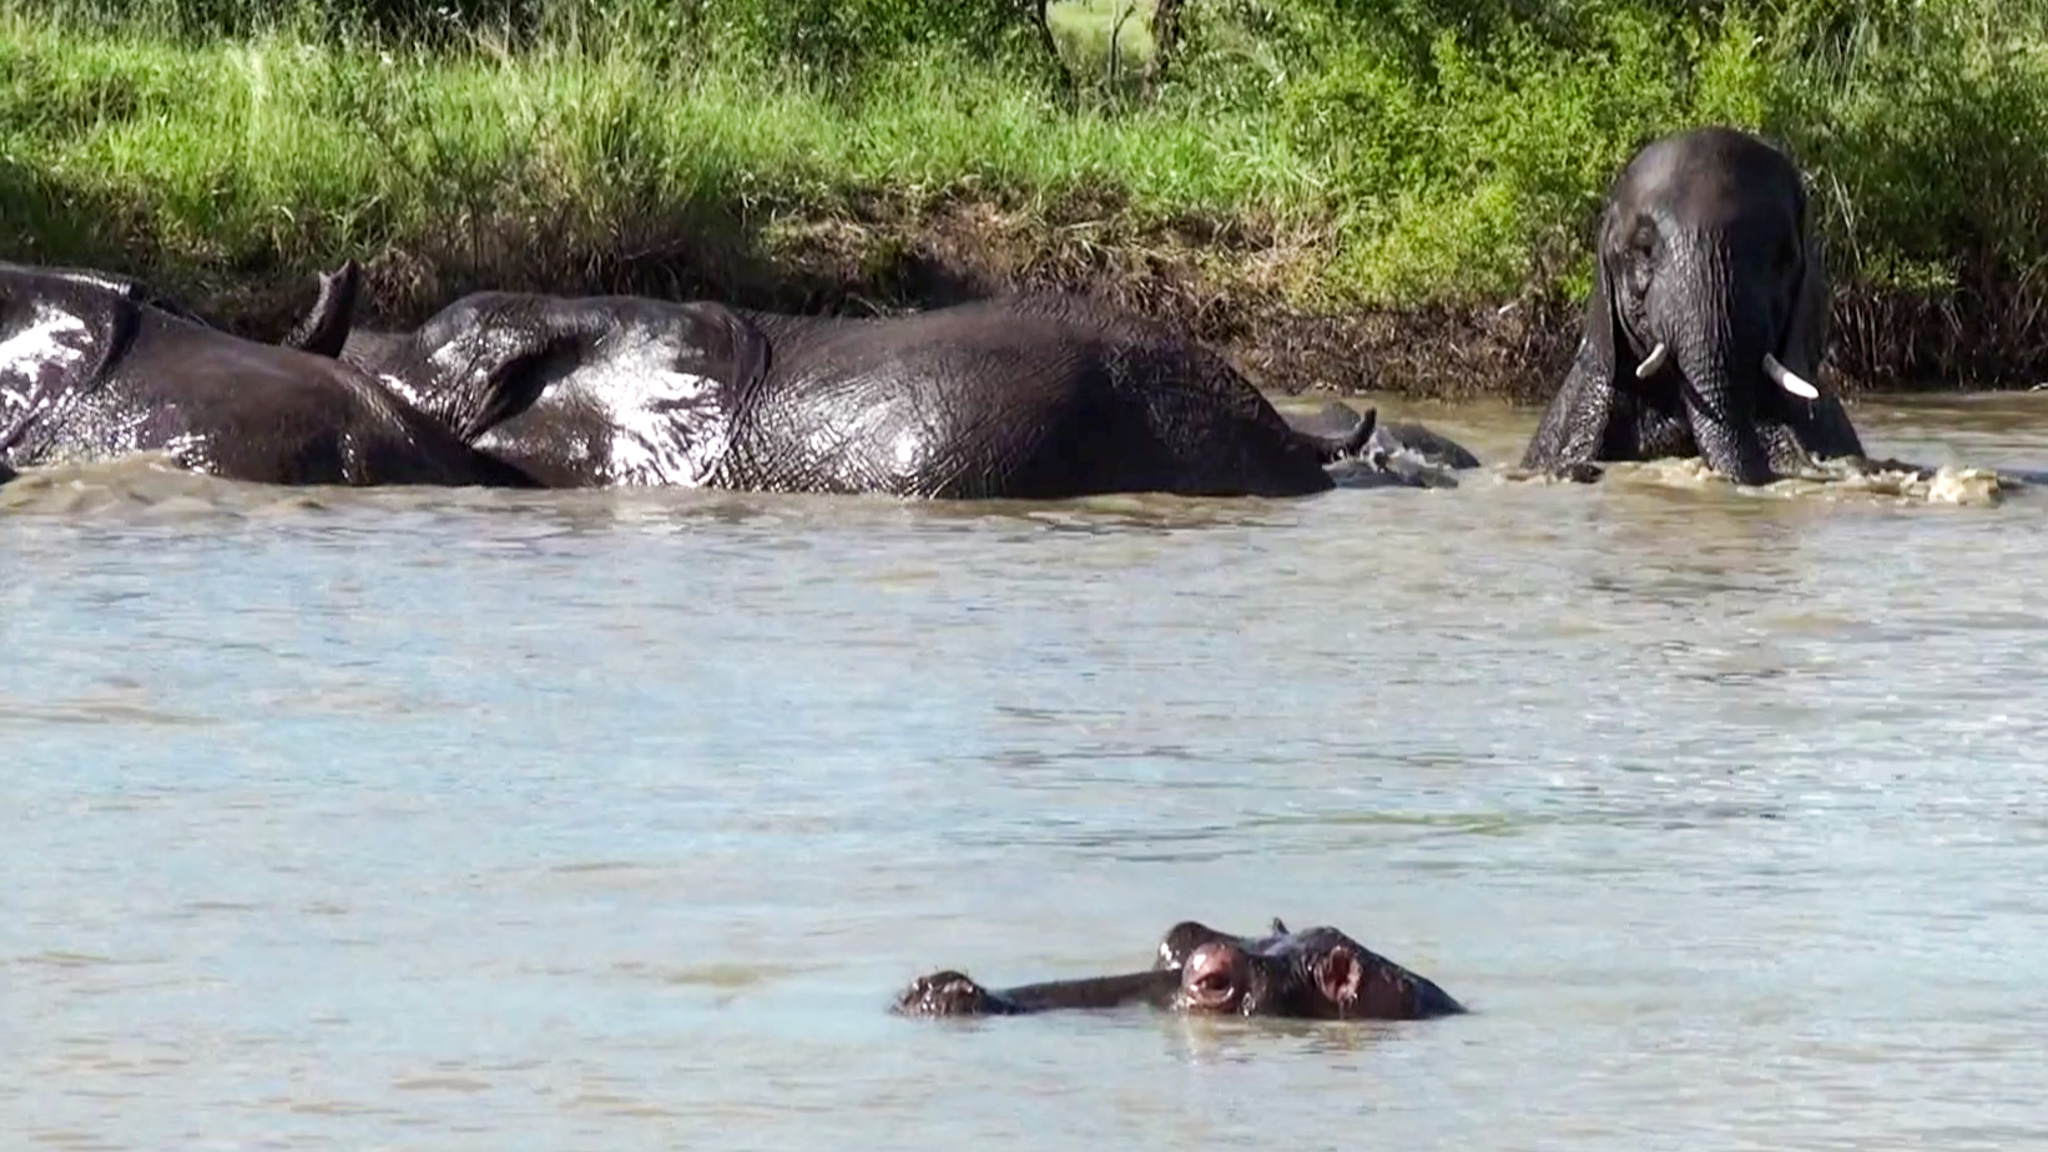 Grumpy Hippo Disturbed by Elephant’s Pool Party